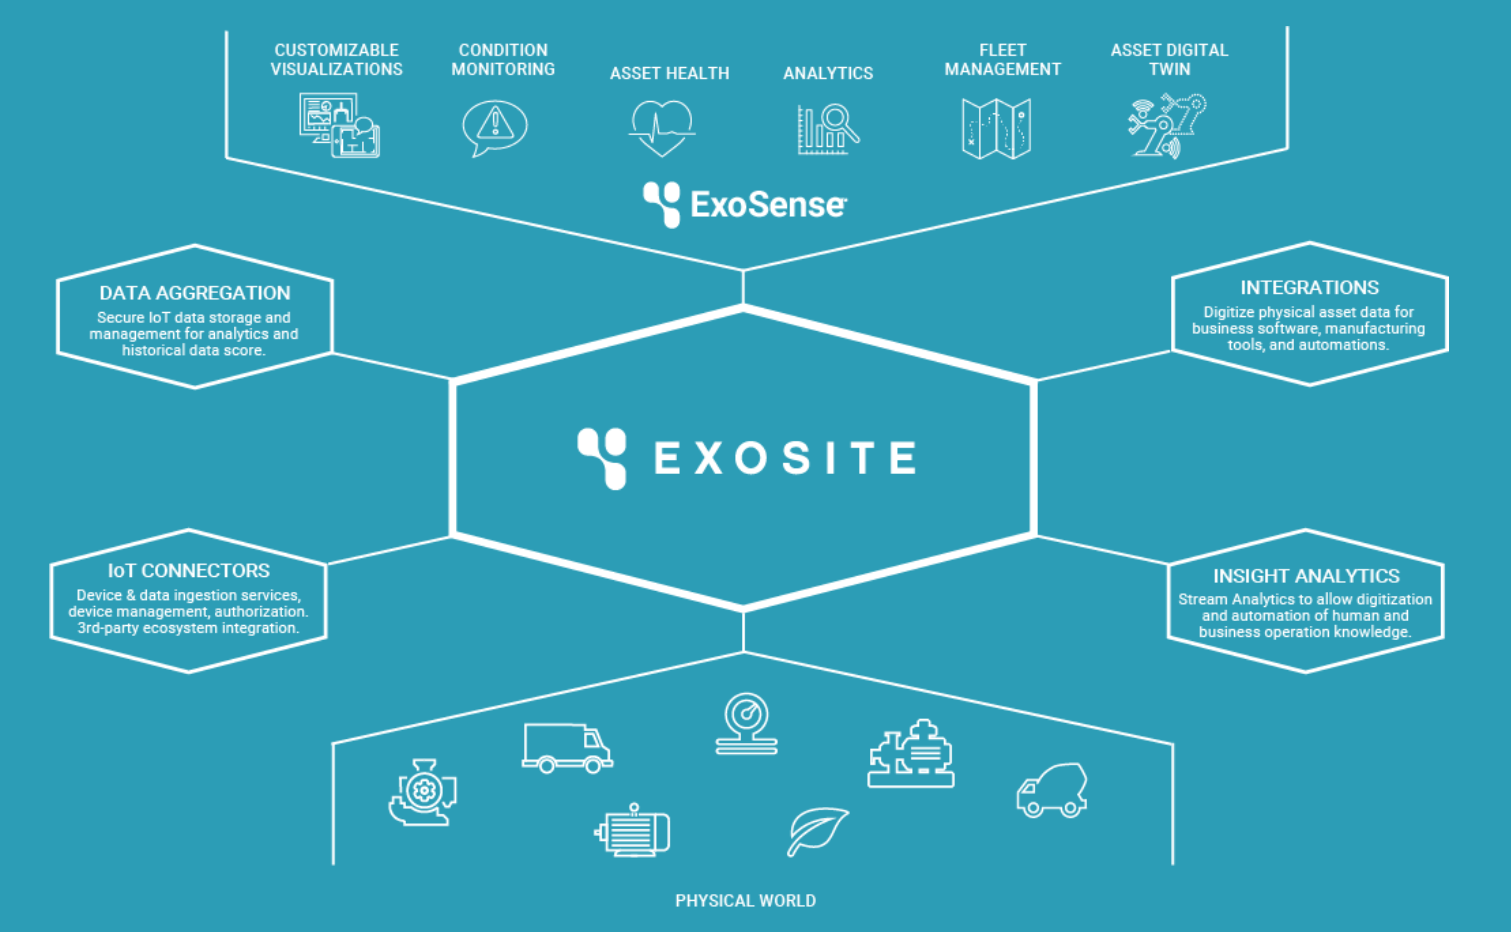 Exosite：ExoSense® Condition Monitoring Solution